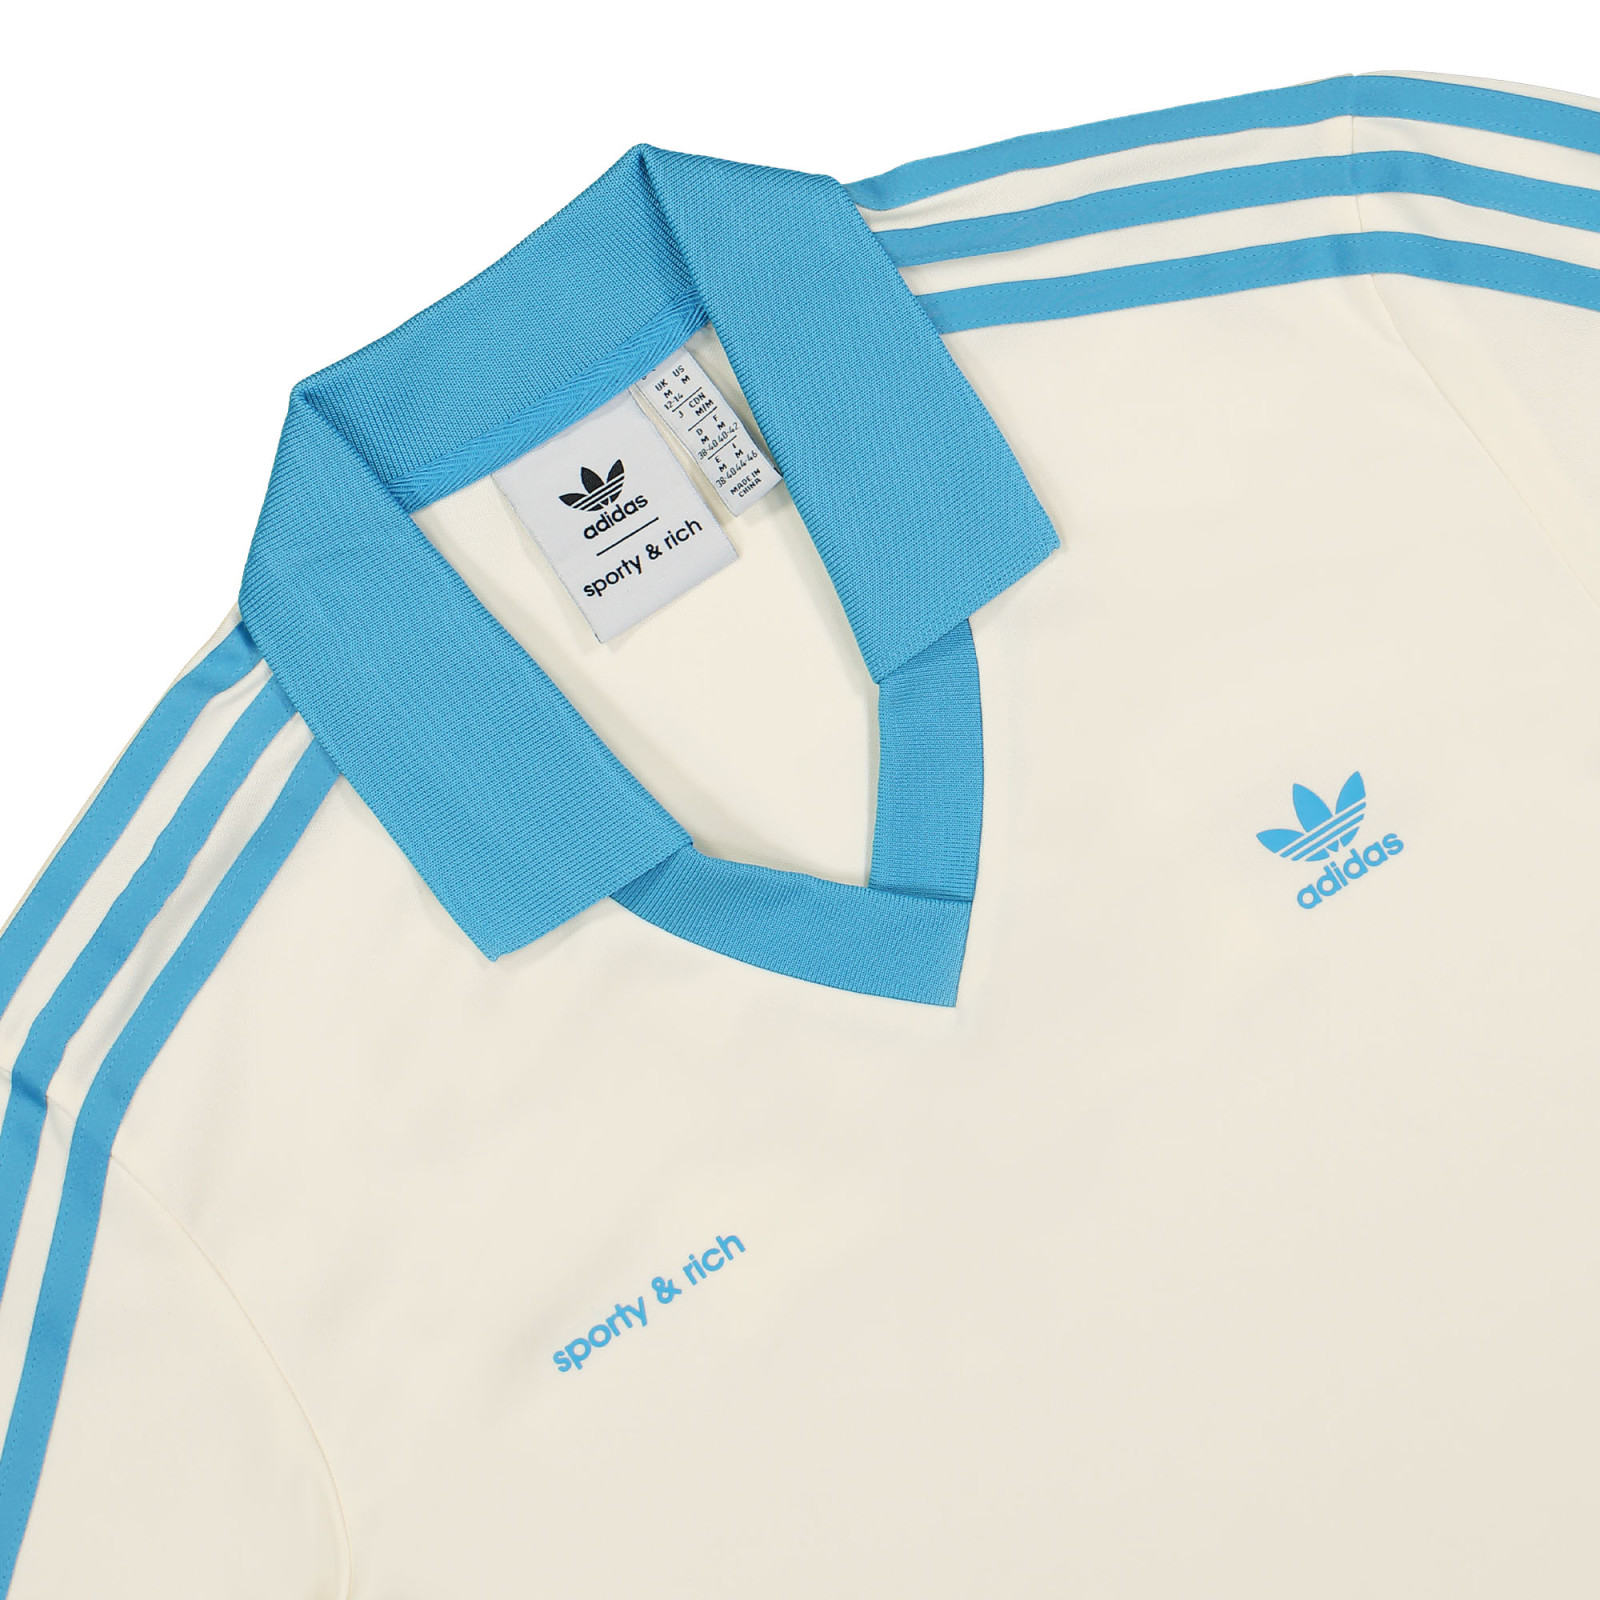 SPORTY & RICH x Adidas
LS Soccer Jersey
Cream White